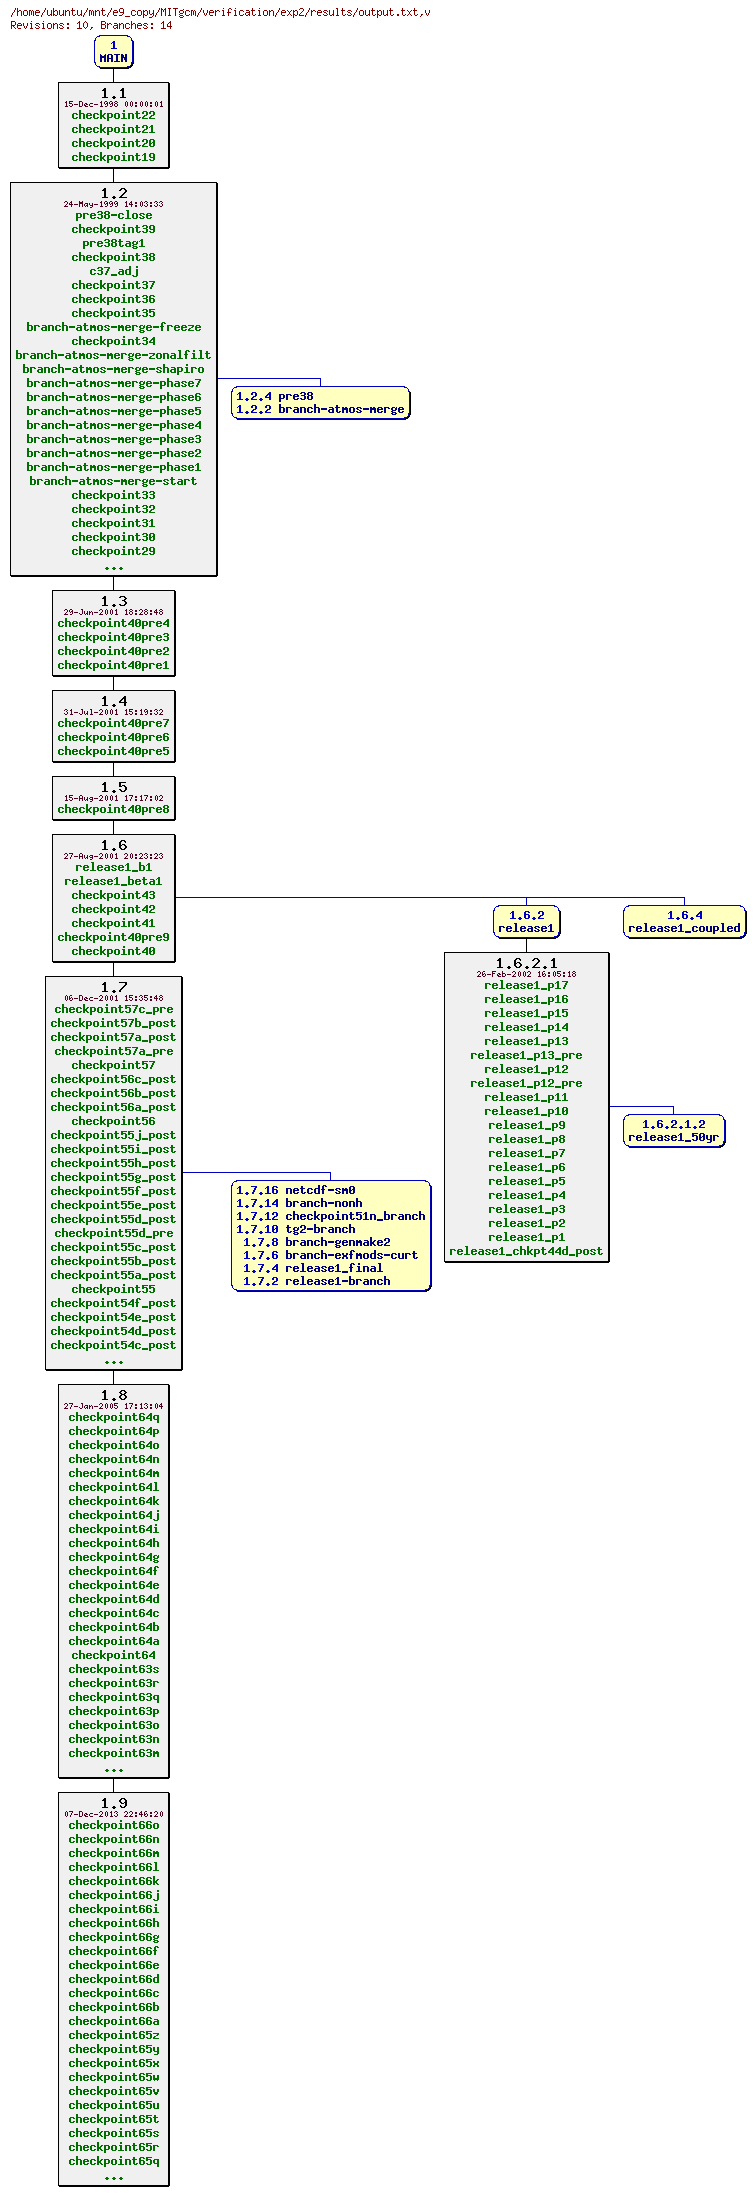 Revisions of MITgcm/verification/exp2/results/output.txt